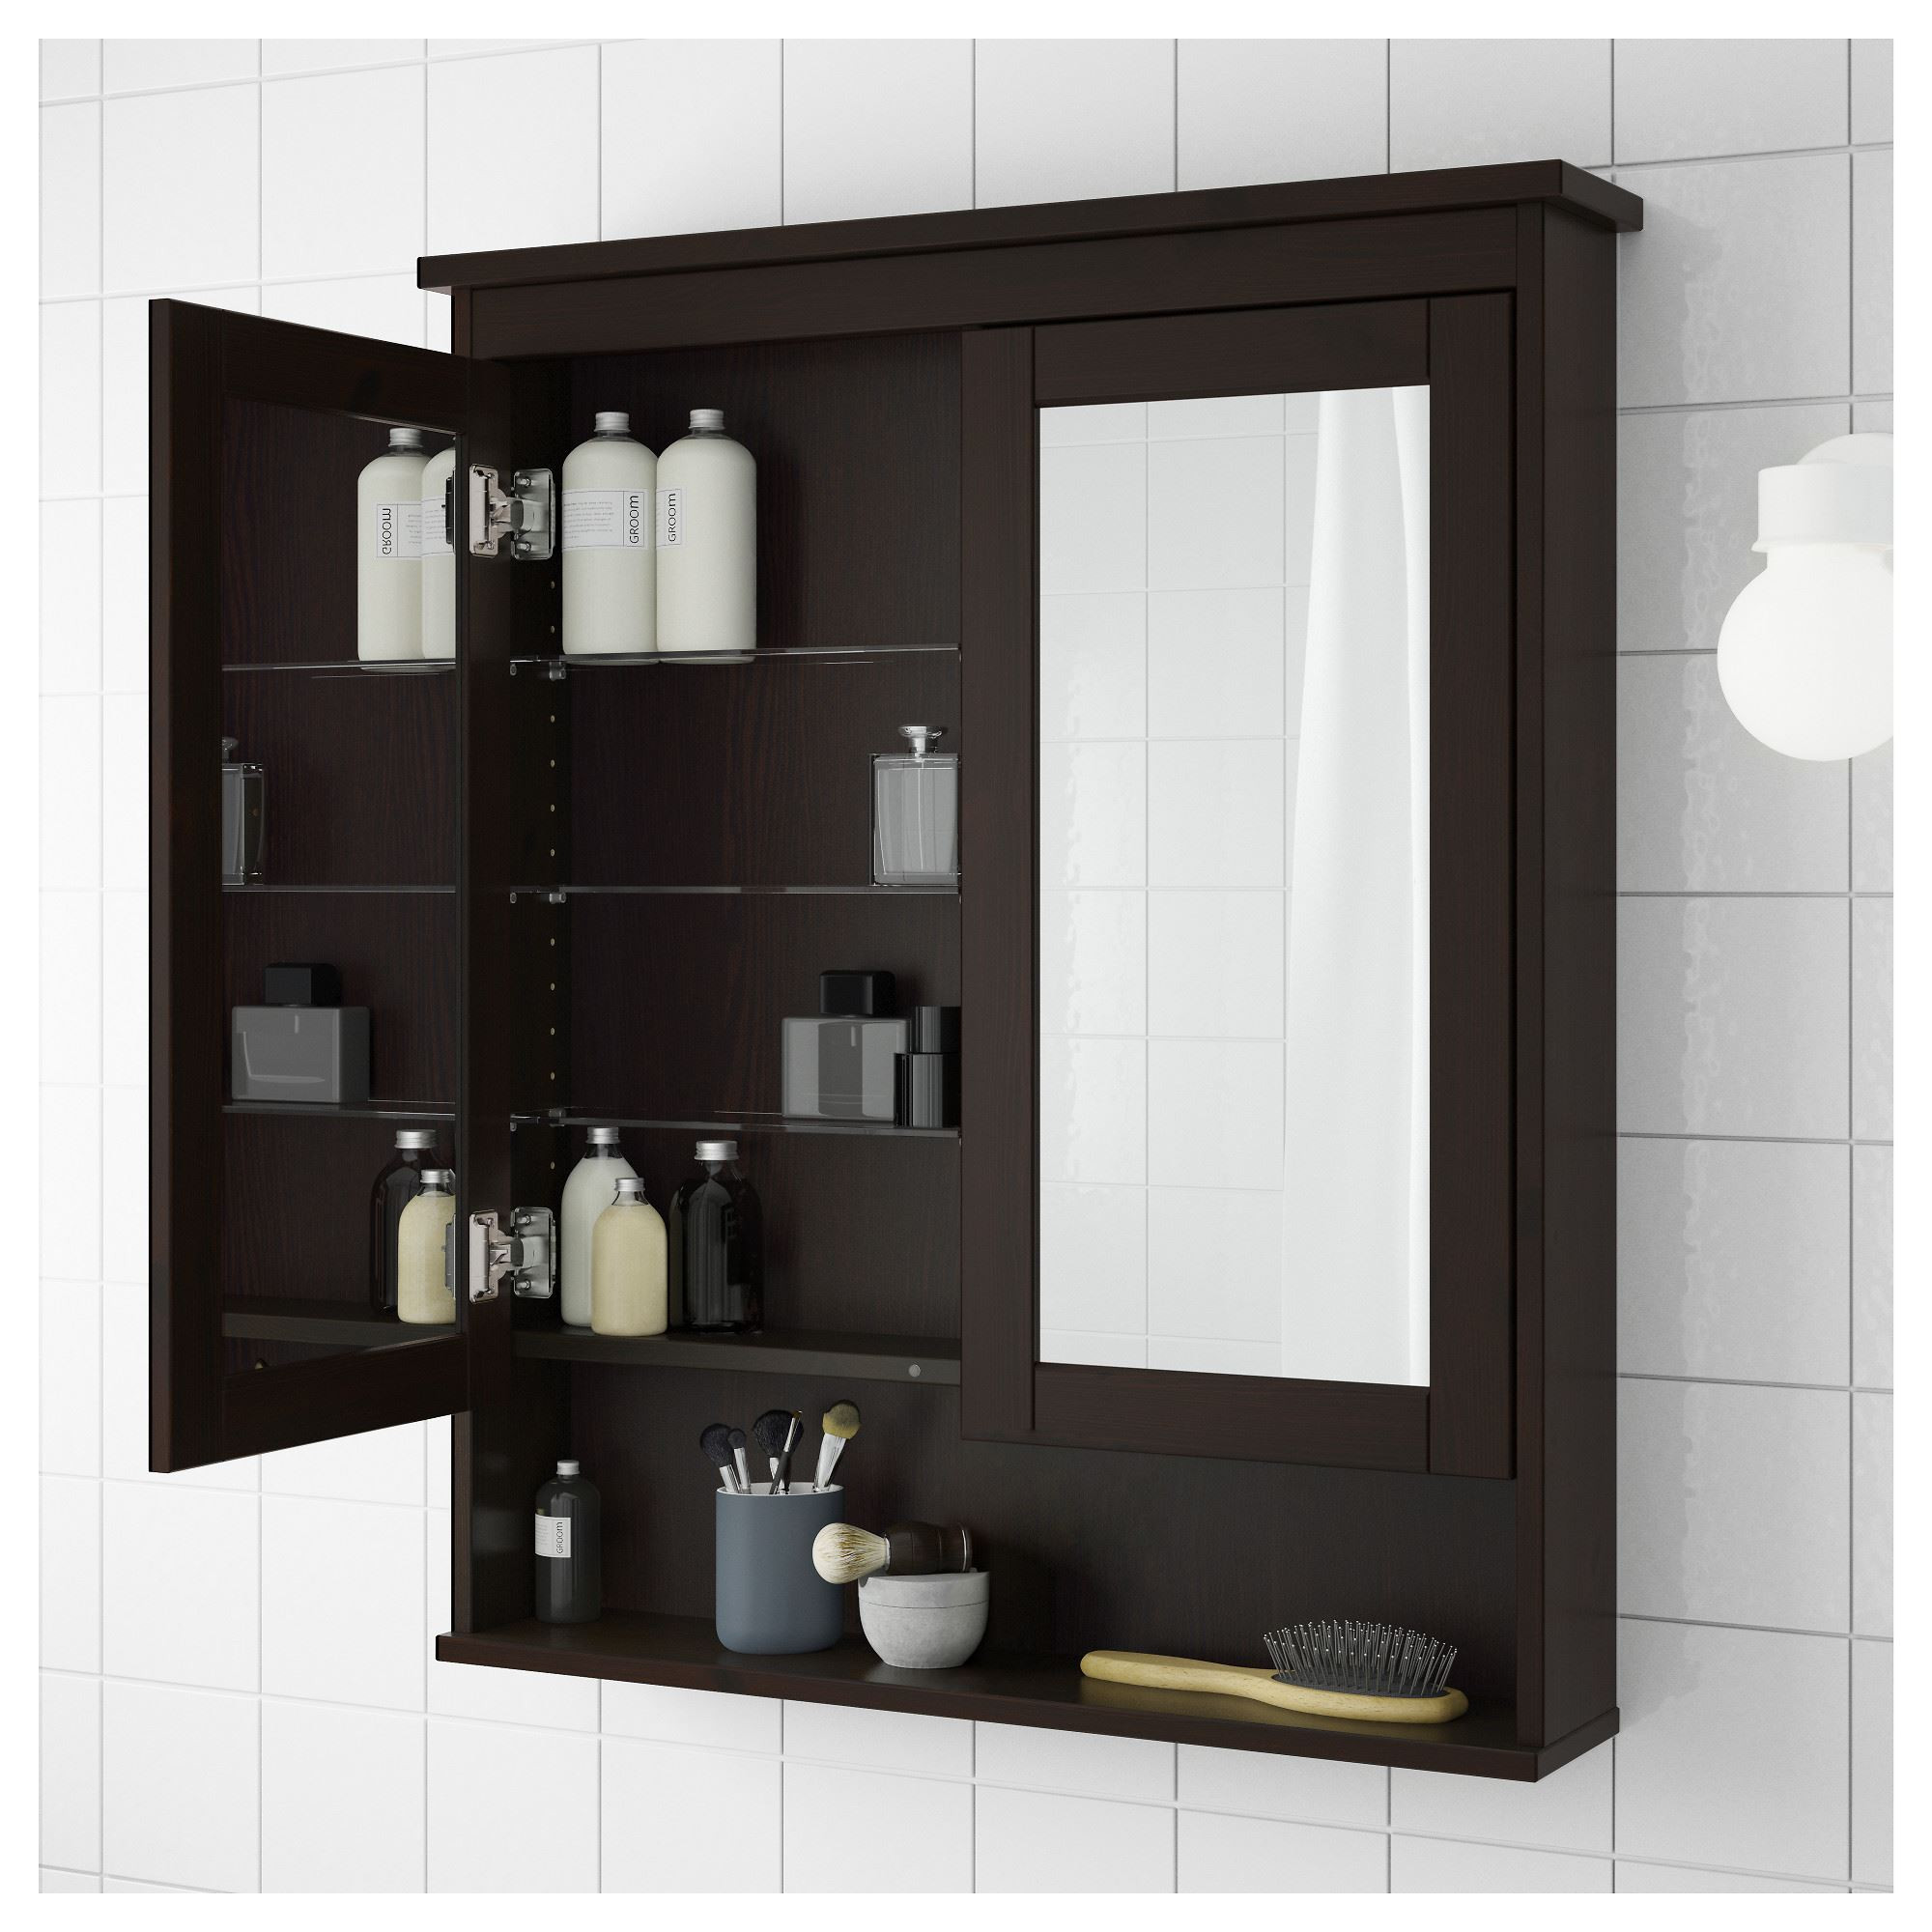 Bathroom Mirrors Ikea
 HEMNES mirror cabinet black brown stain 83x16x98 cm